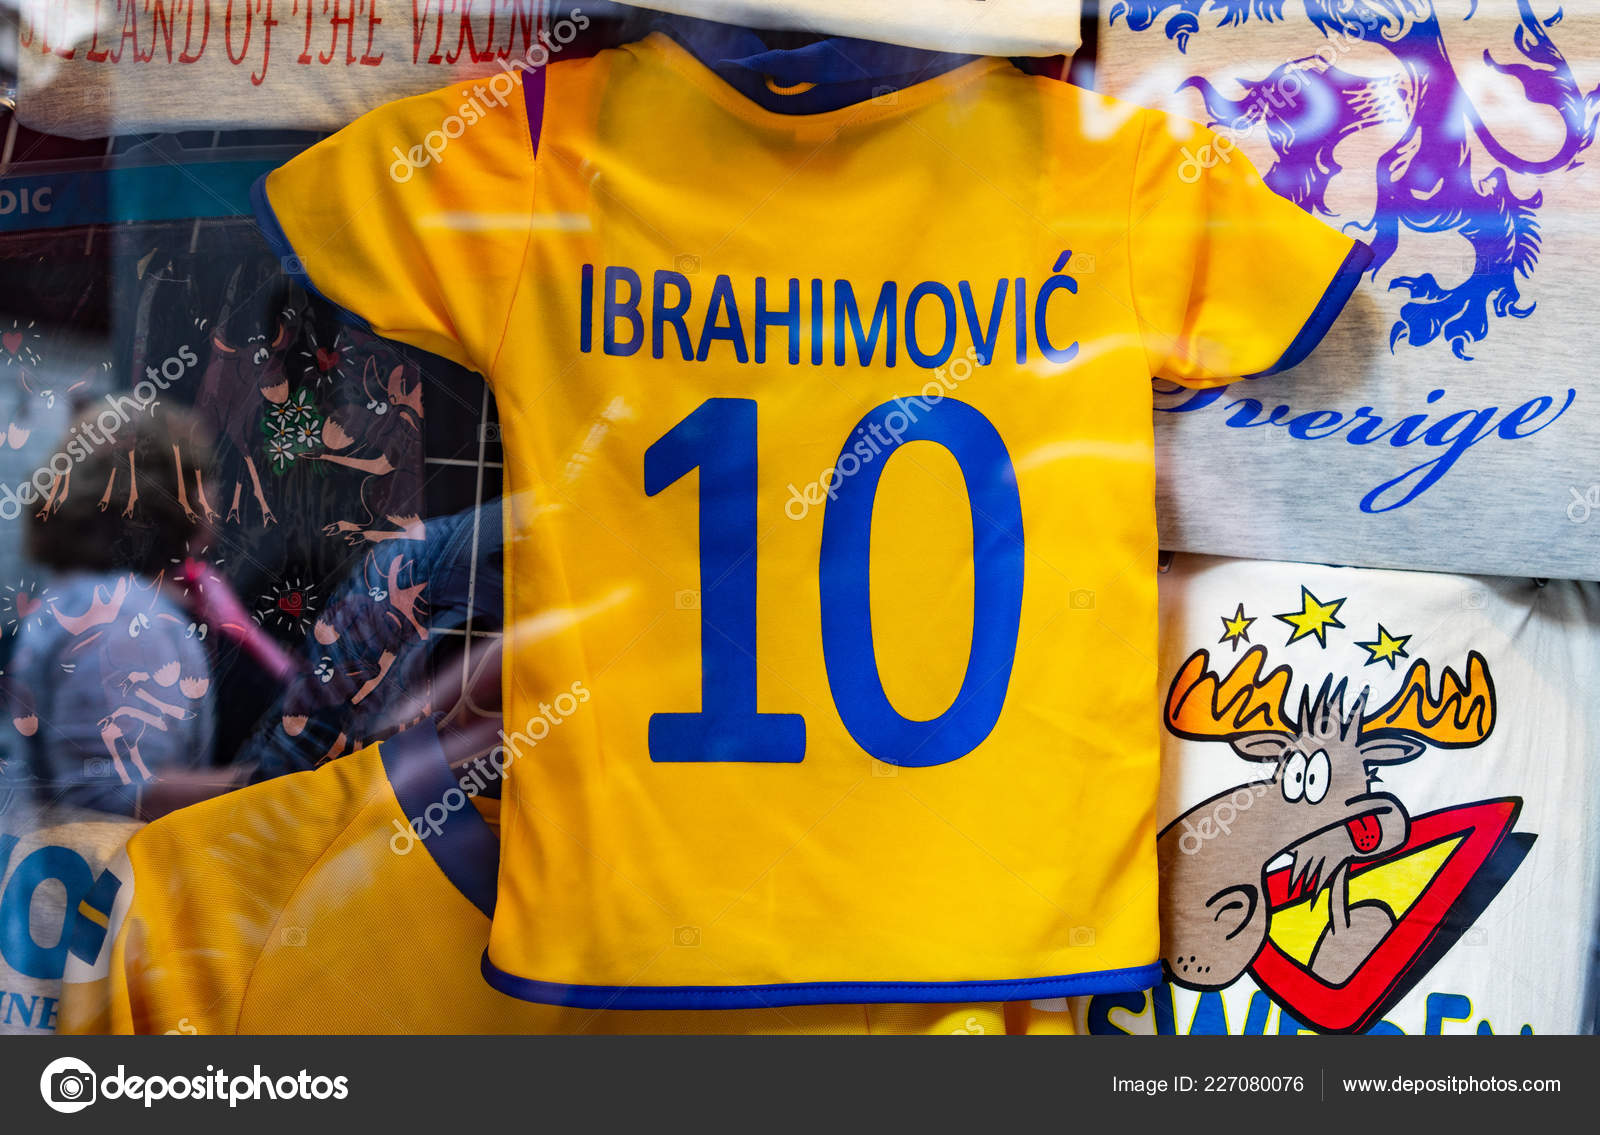 ibrahimovic sweden jersey